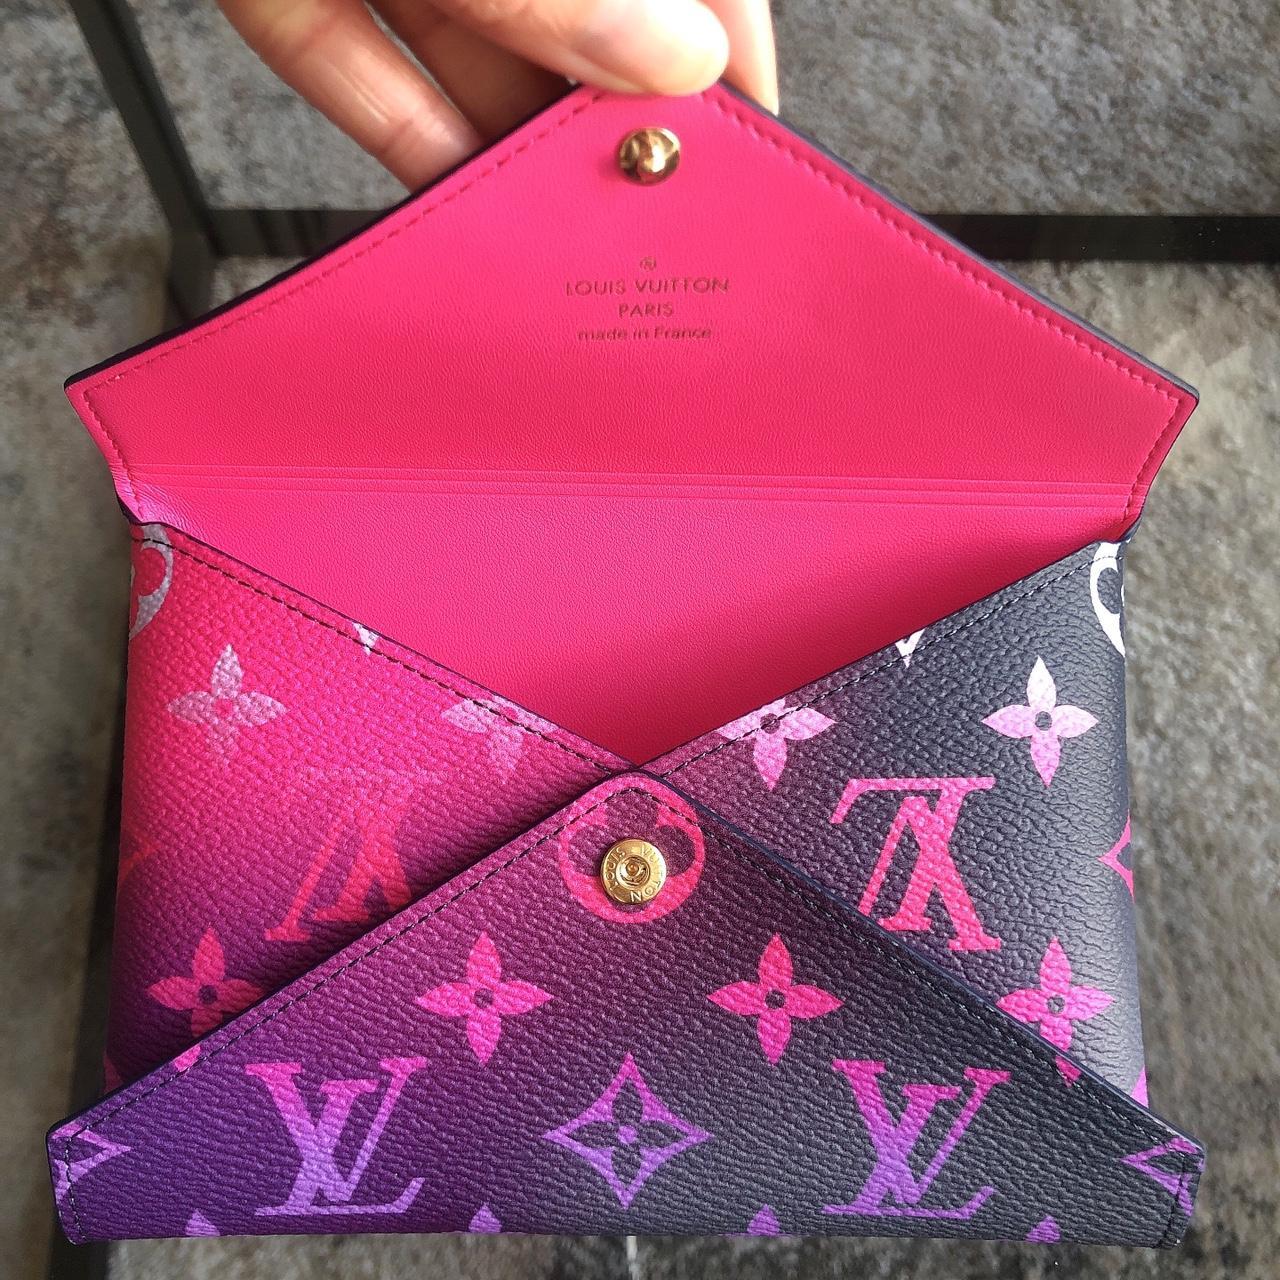 Louis Vuitton kirigami pochette brought in Paris - Depop